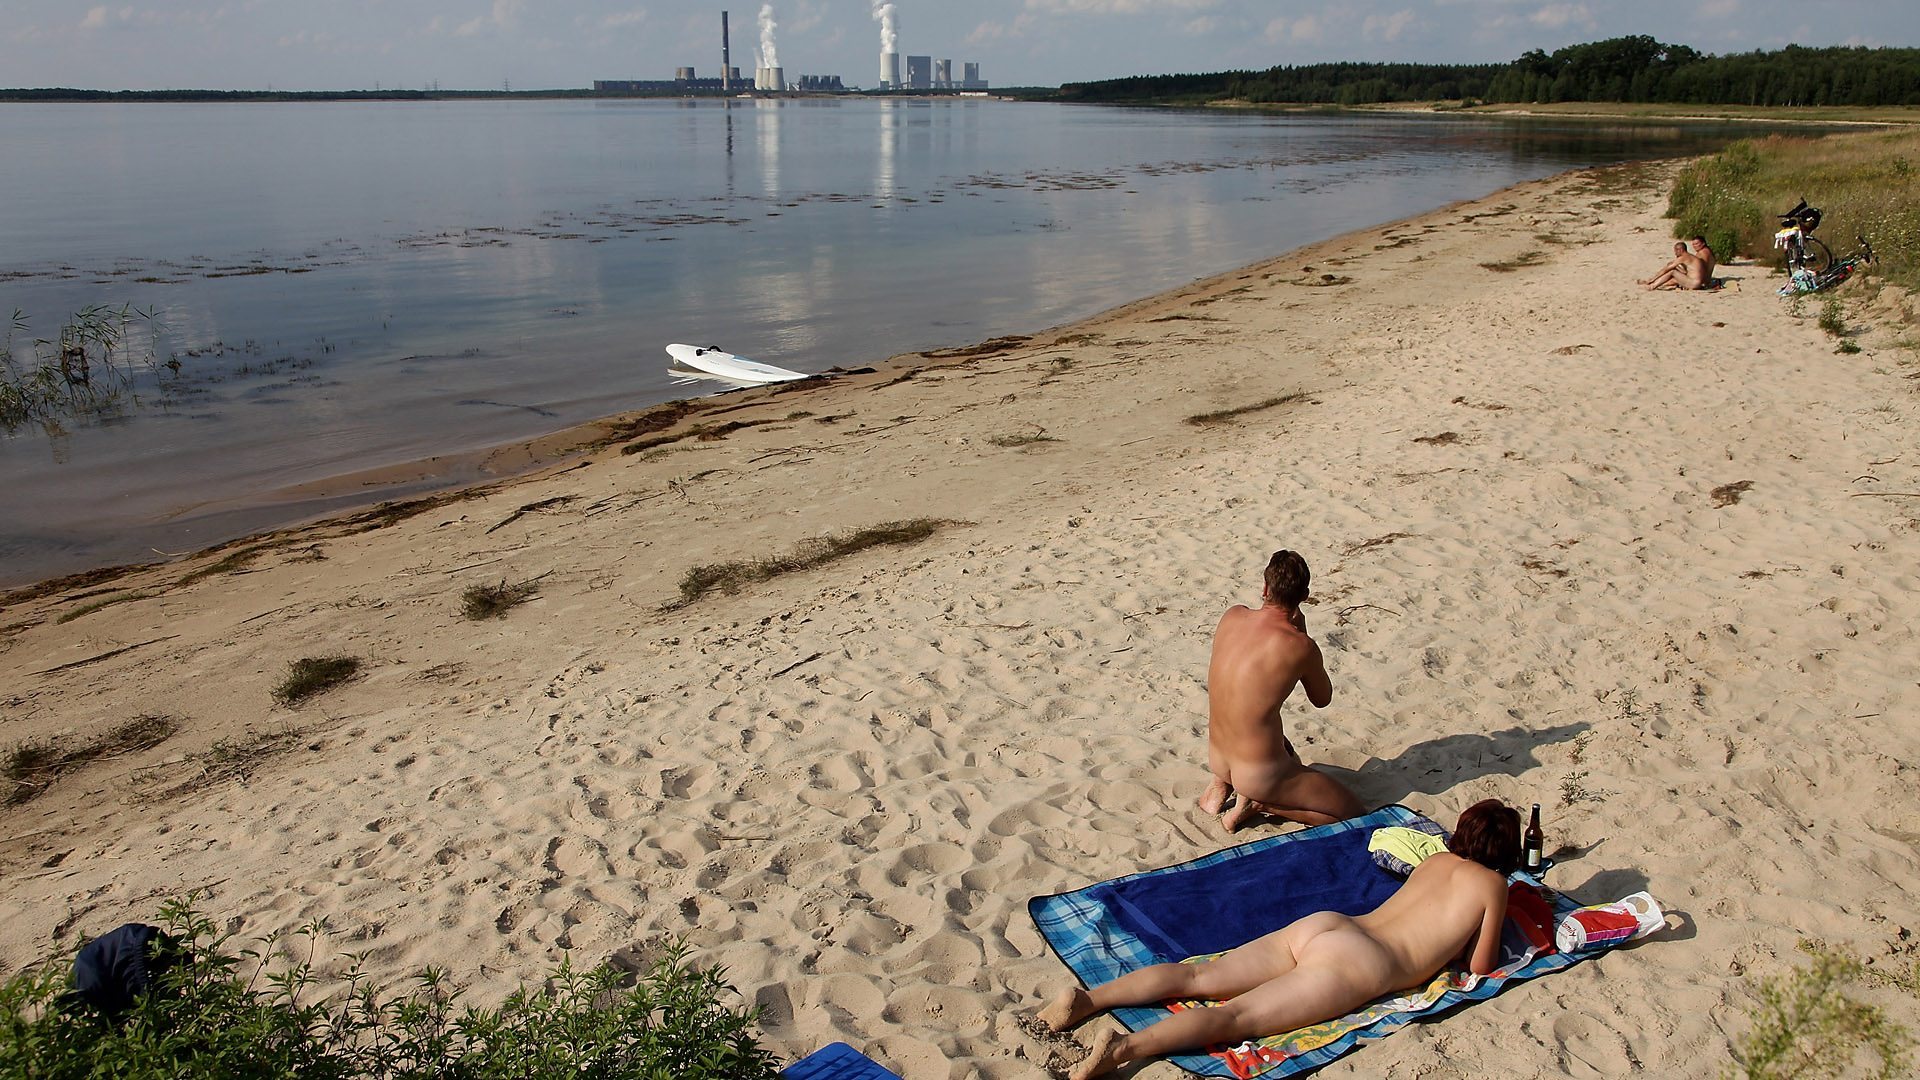 Sean Gallup/Getty Images法国裸体度假胜地如何成为传播新冠病毒的